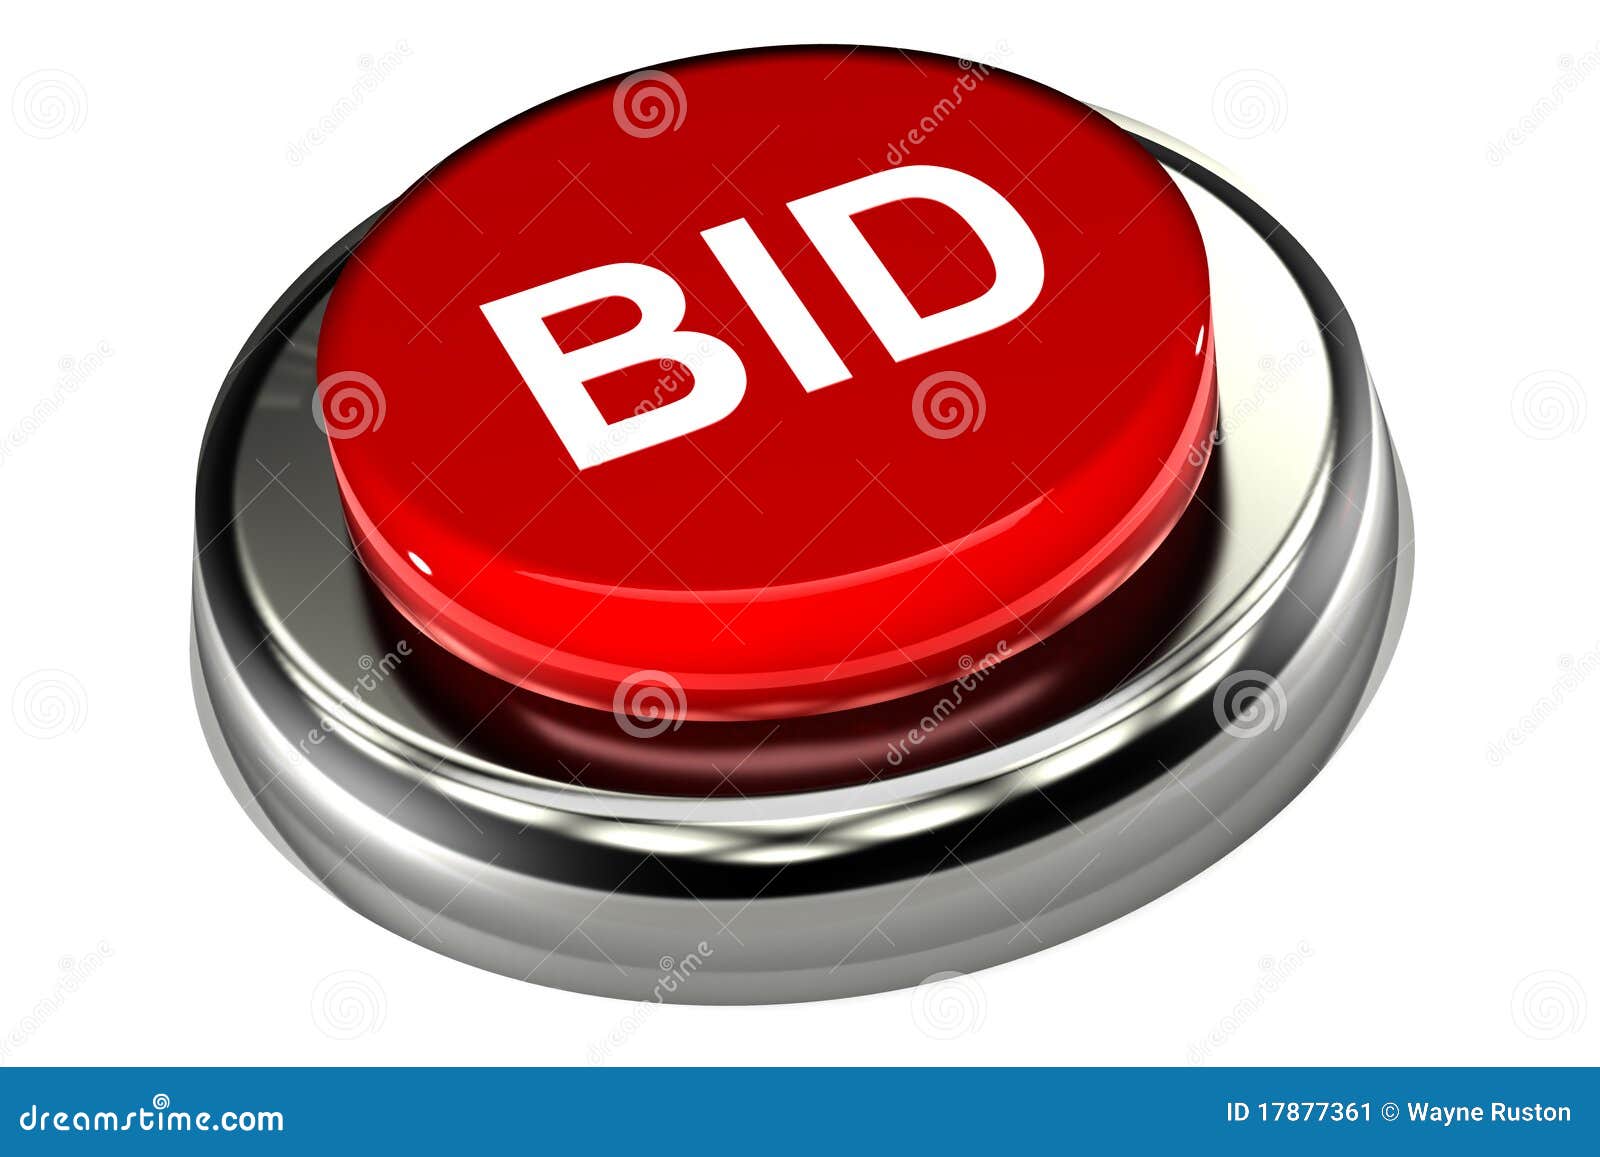 bid push button